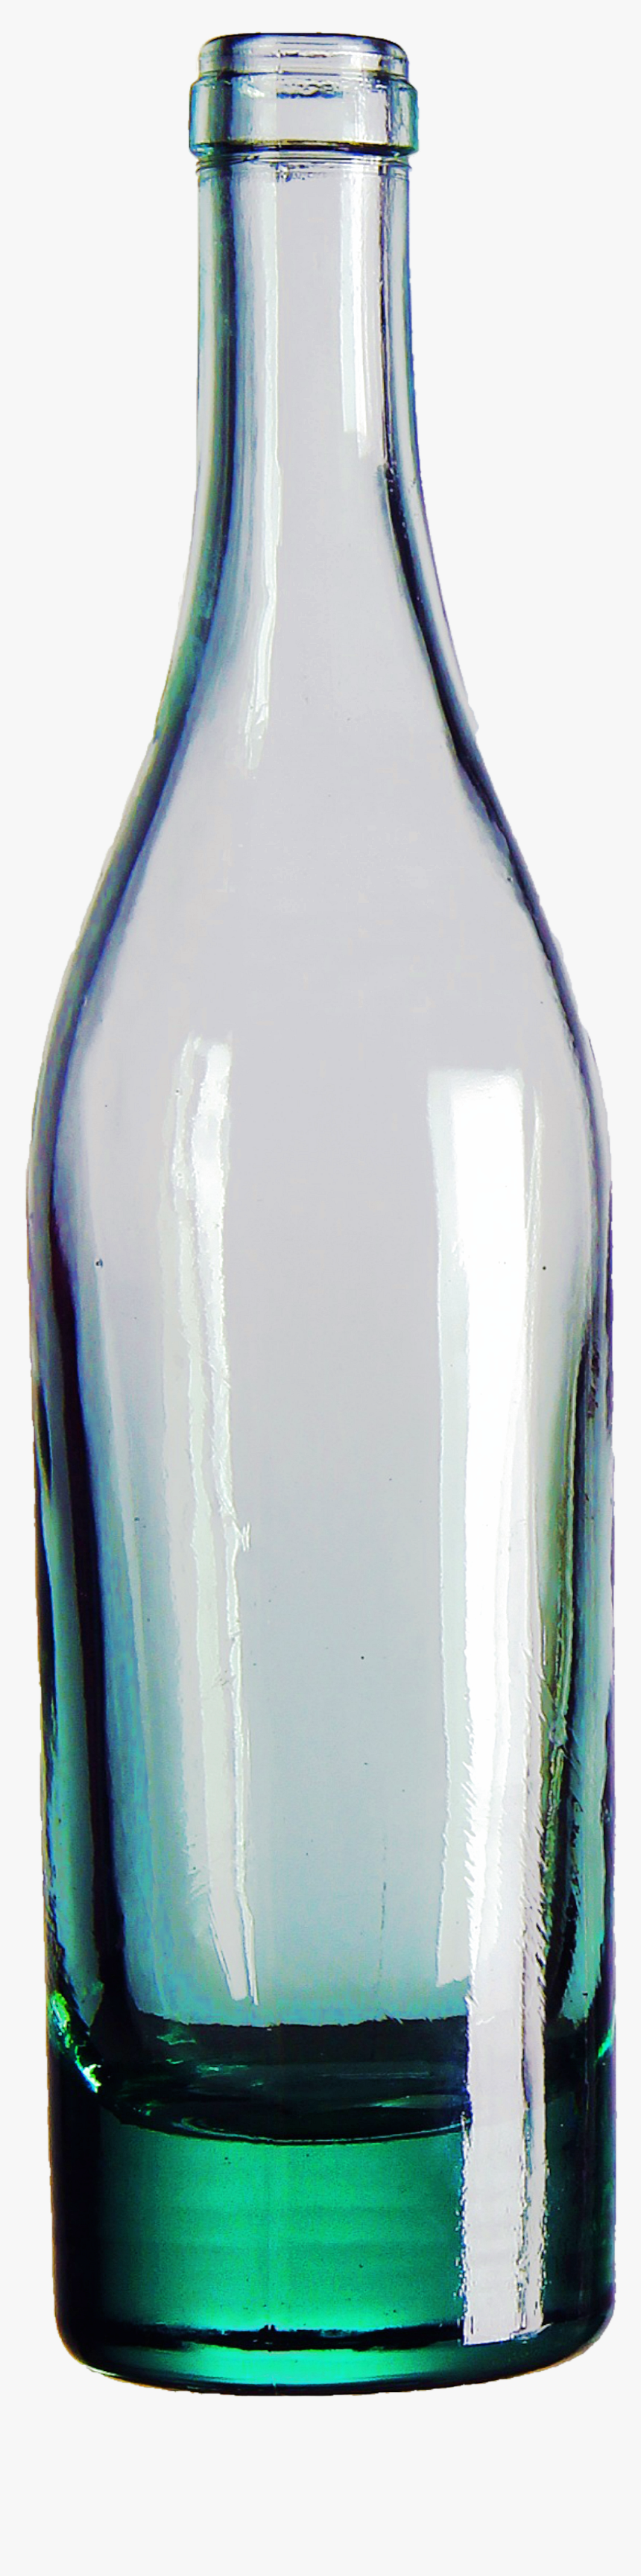 Mirror Bottle Png